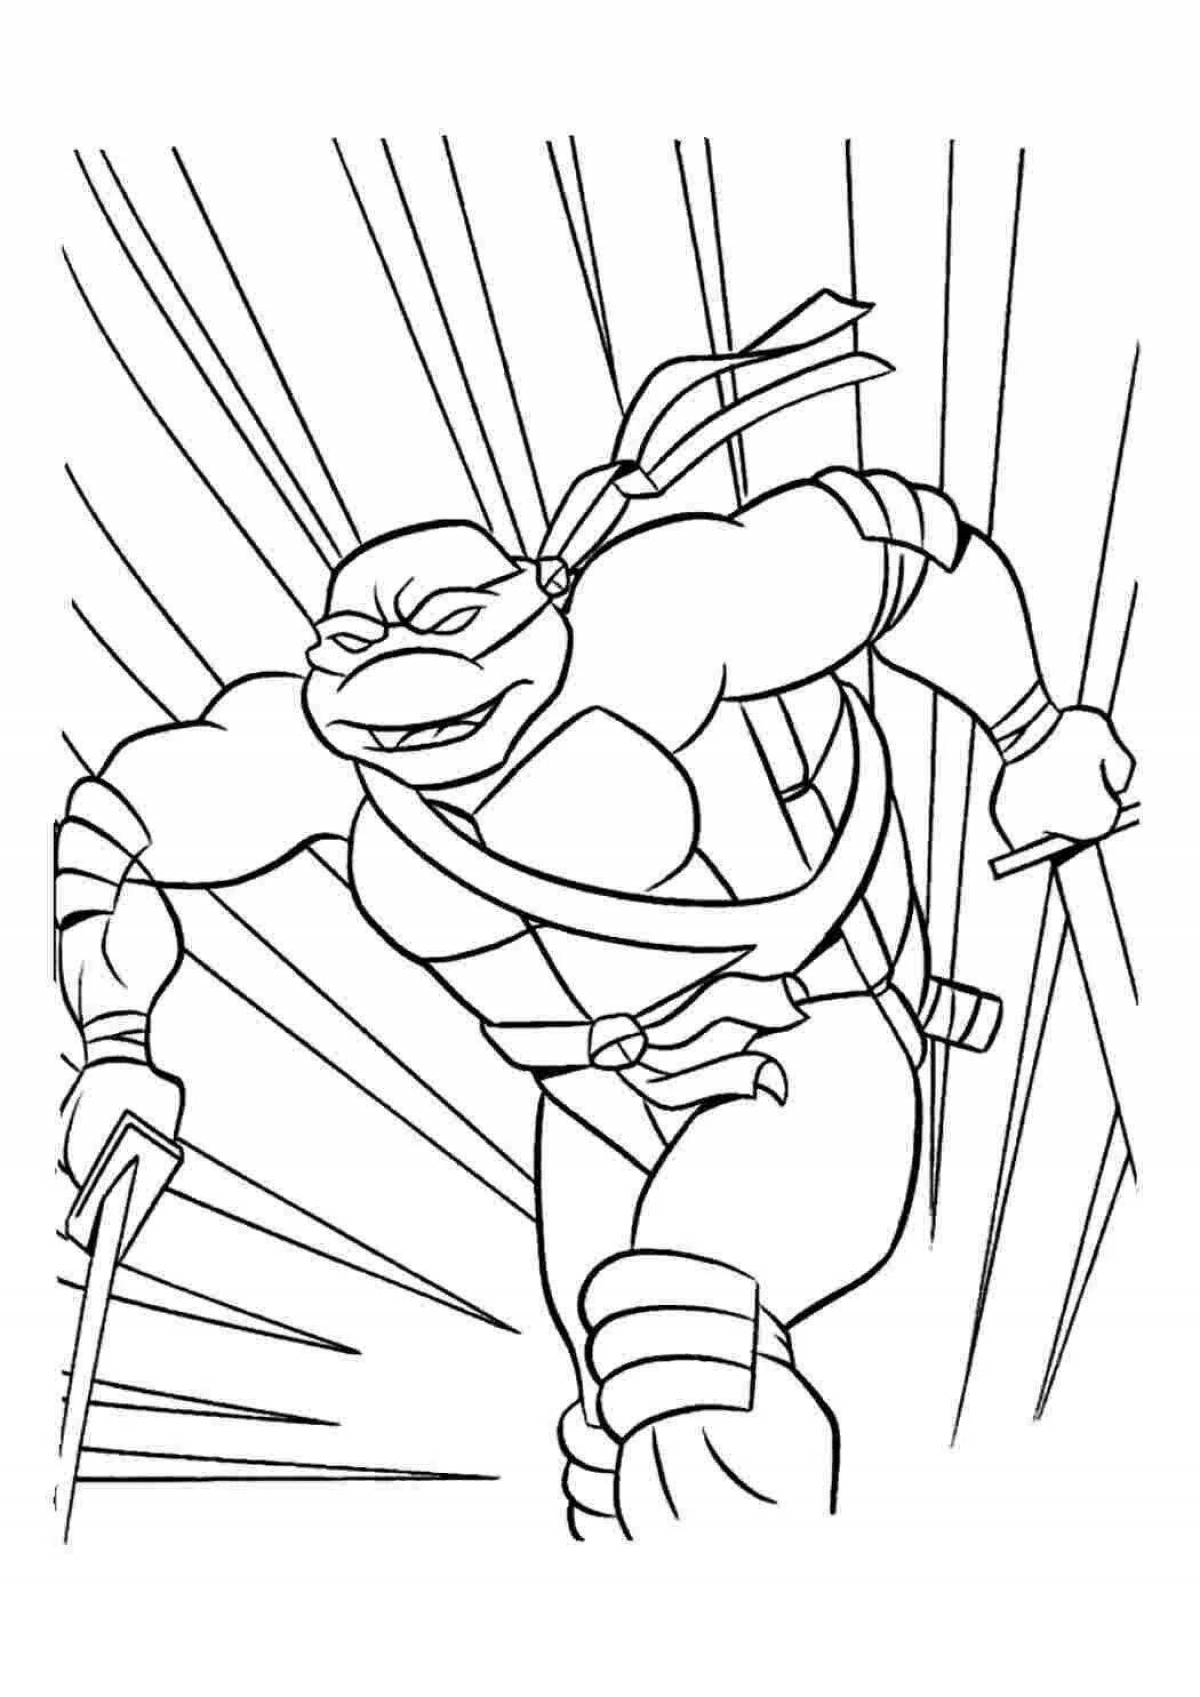 Fun coloring ninja turtles villains